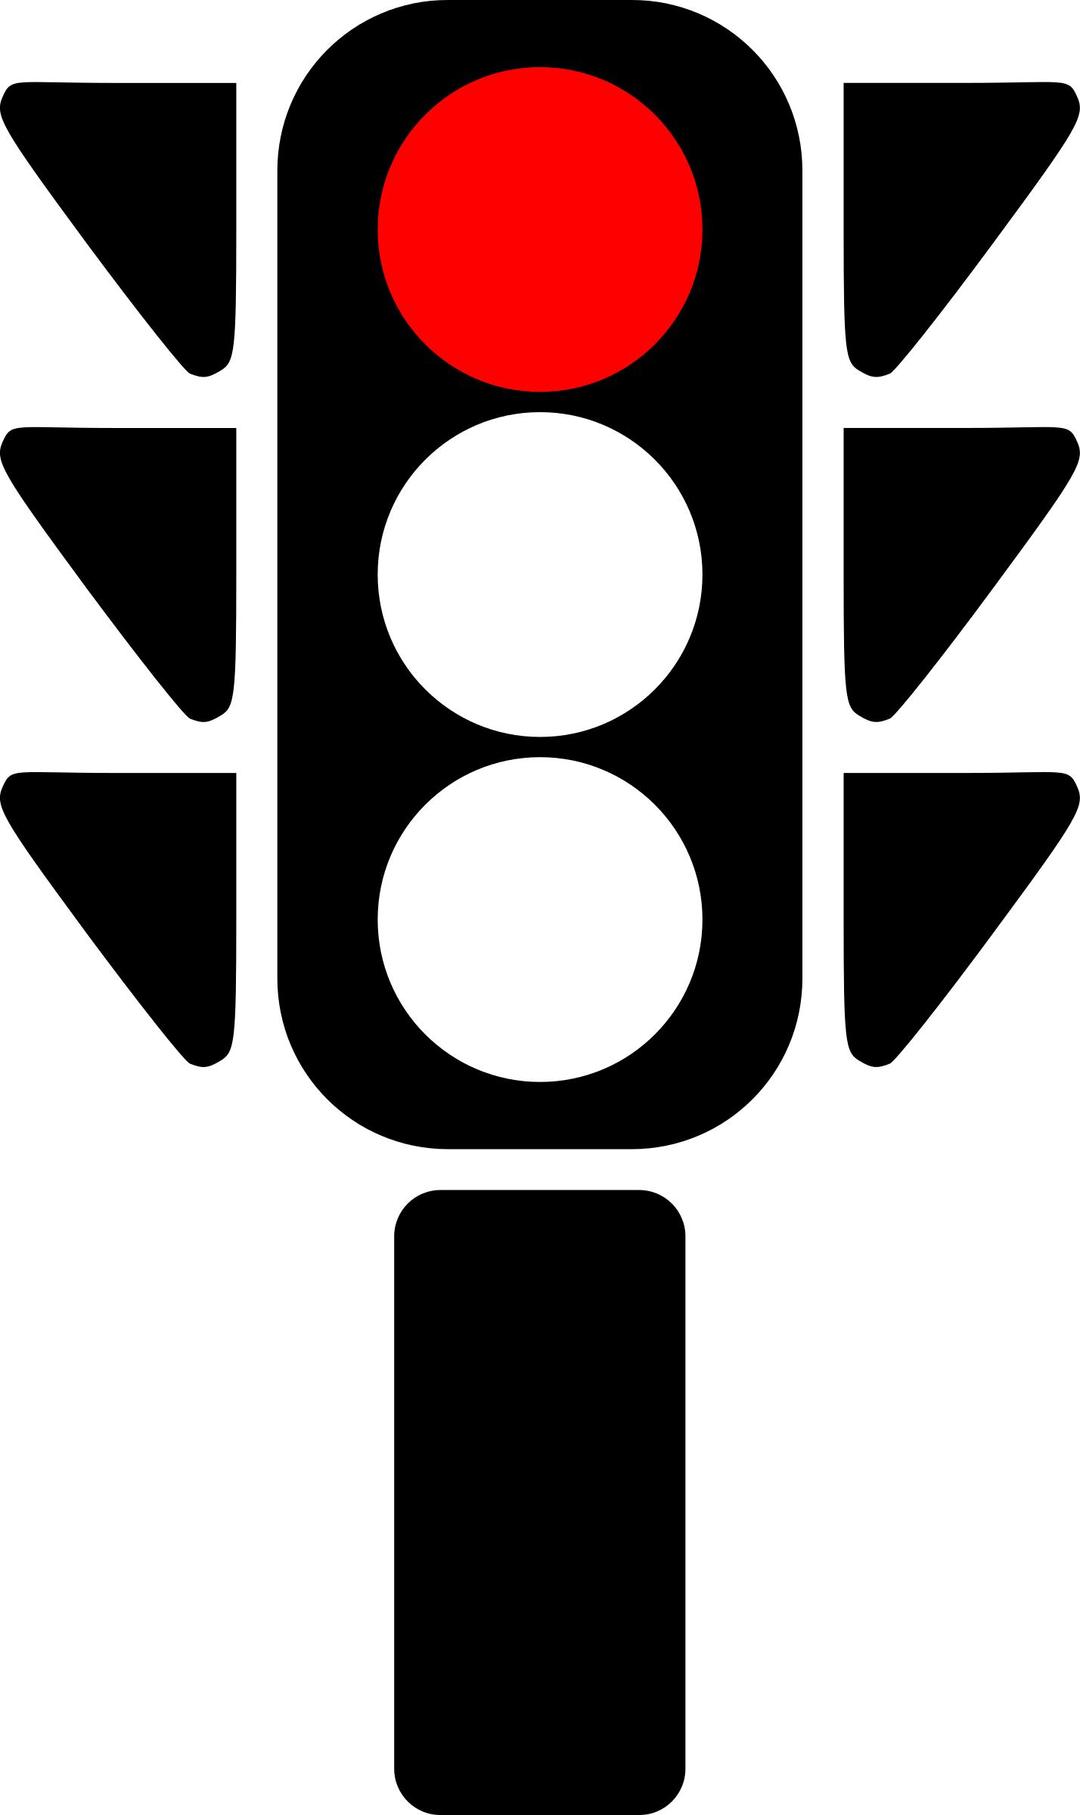 Traffic semaphore red light png transparent